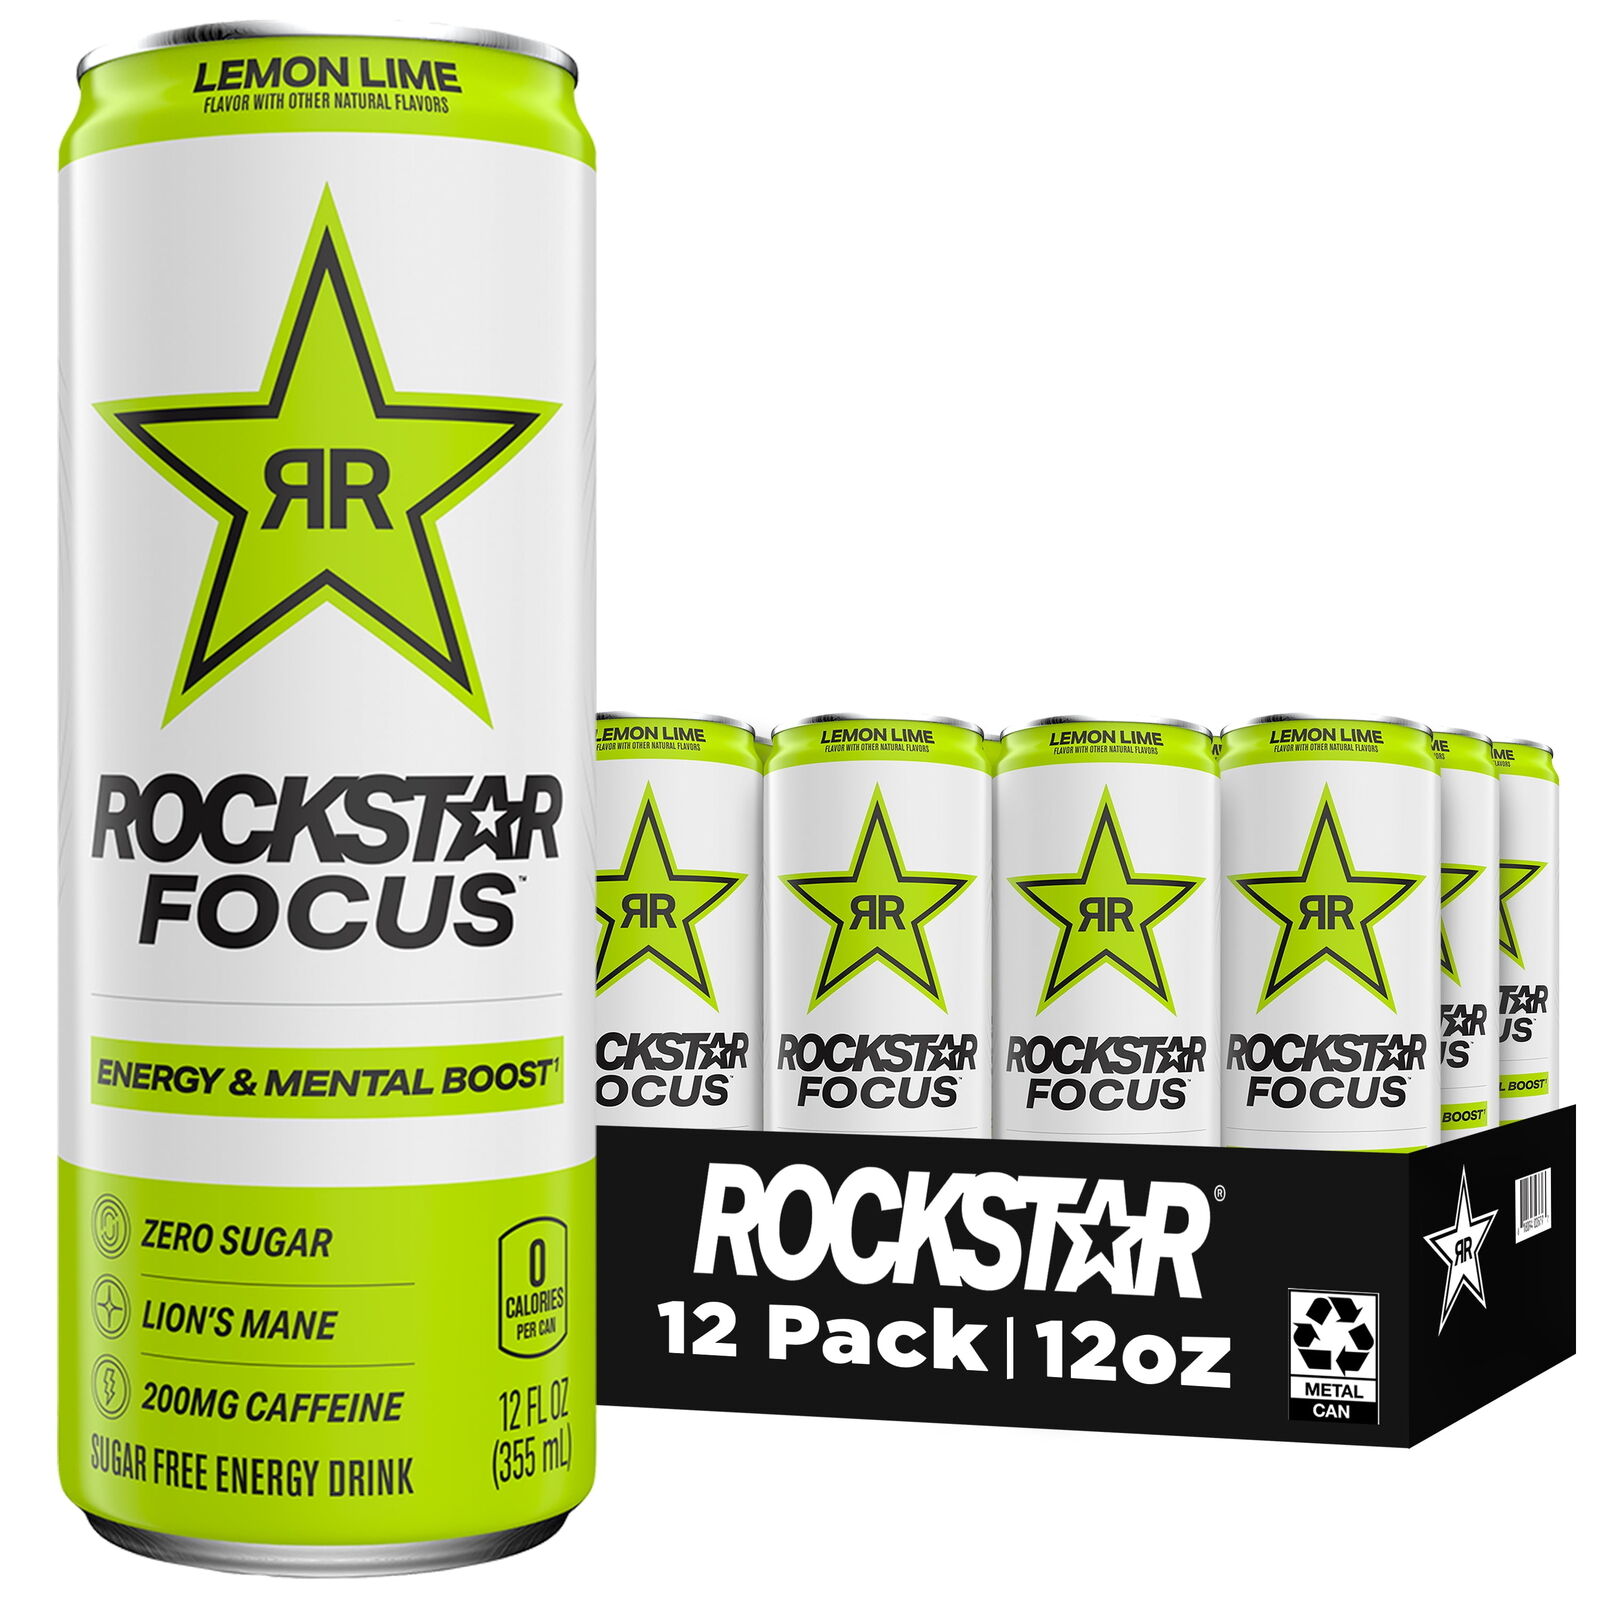 Rockstar Focus Zero Sugar Energy Drink, Lemon Lime Flavor, Lion’s Mane